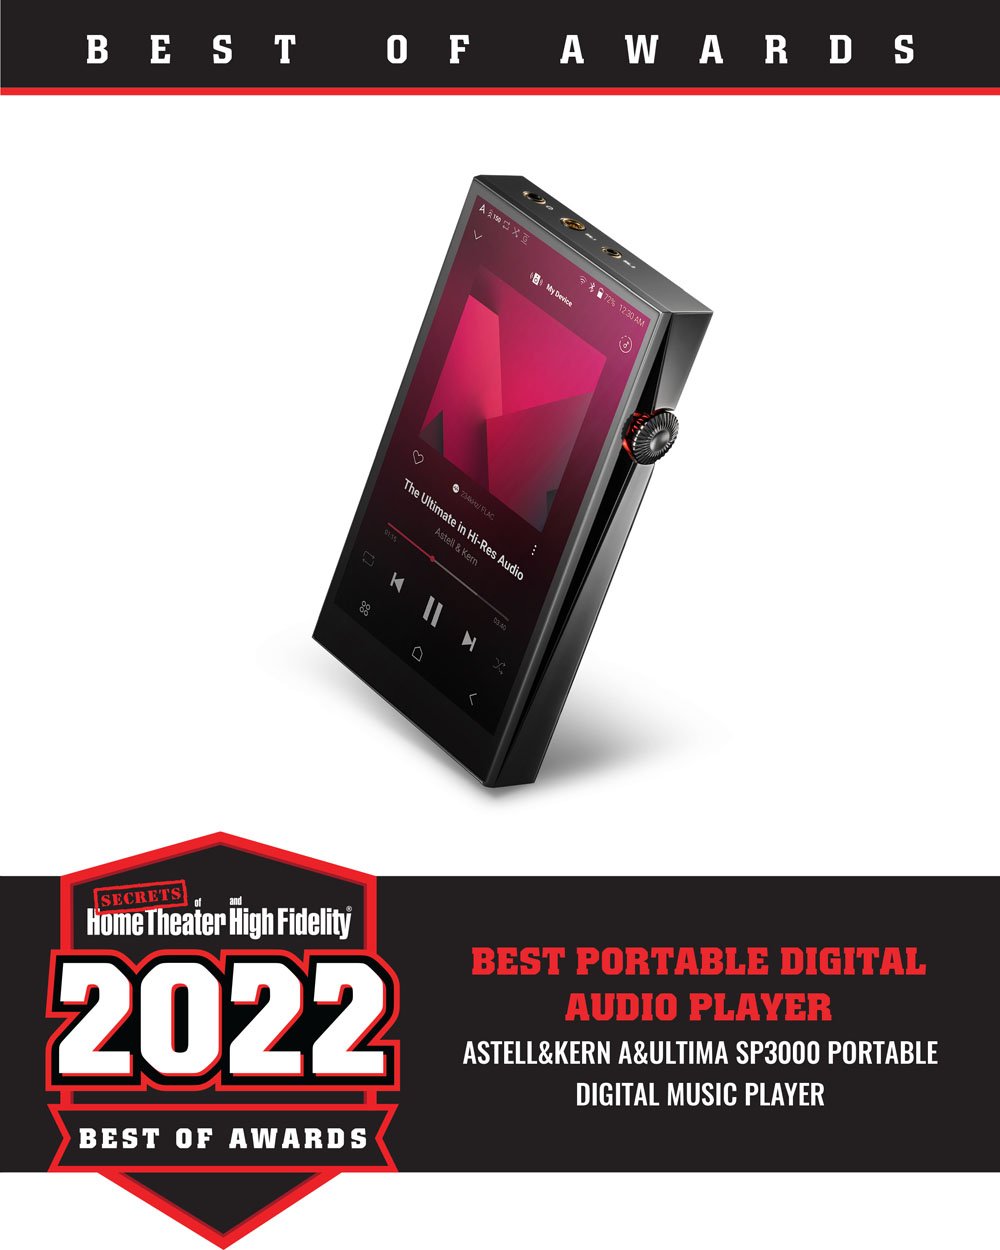 Astell&Kern A&ultima SP3000 Portable Digital Music Player Best of 2022 Award